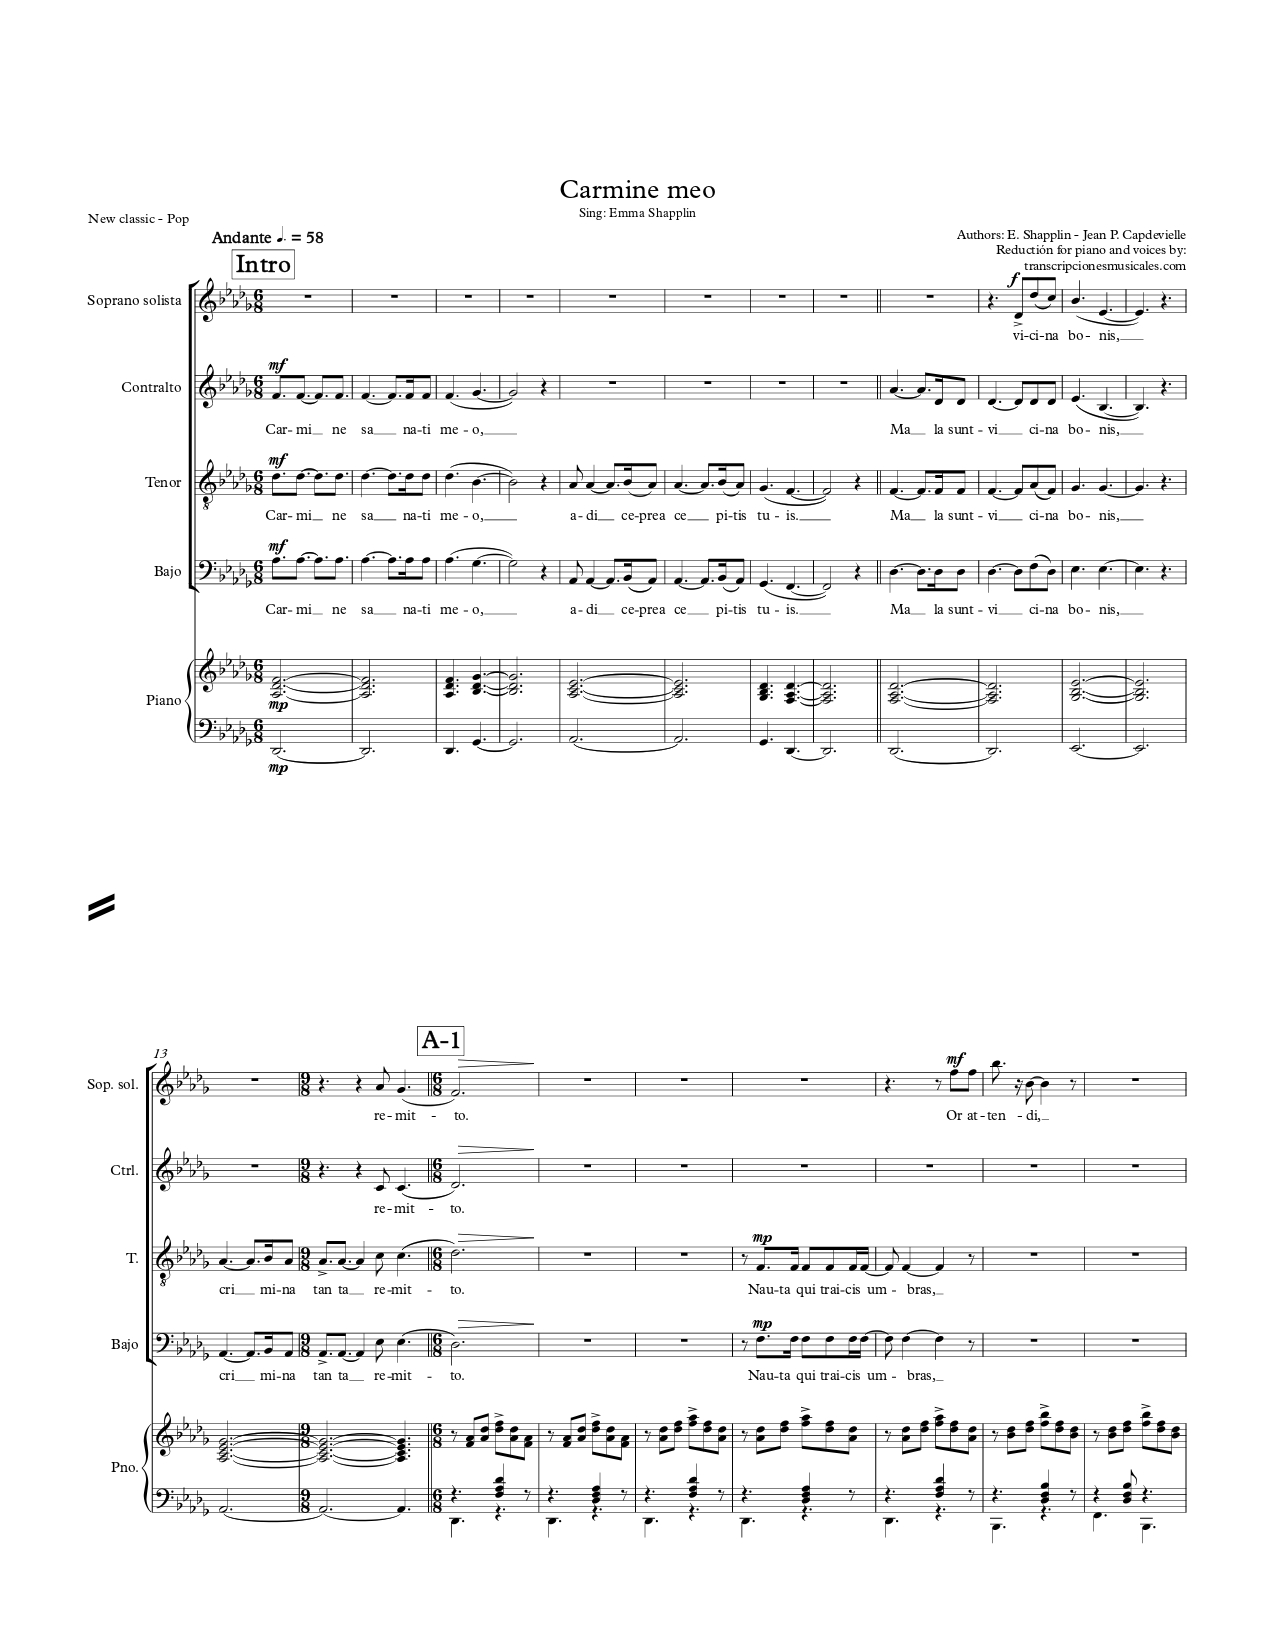 Carmine meo - sheet music page 1